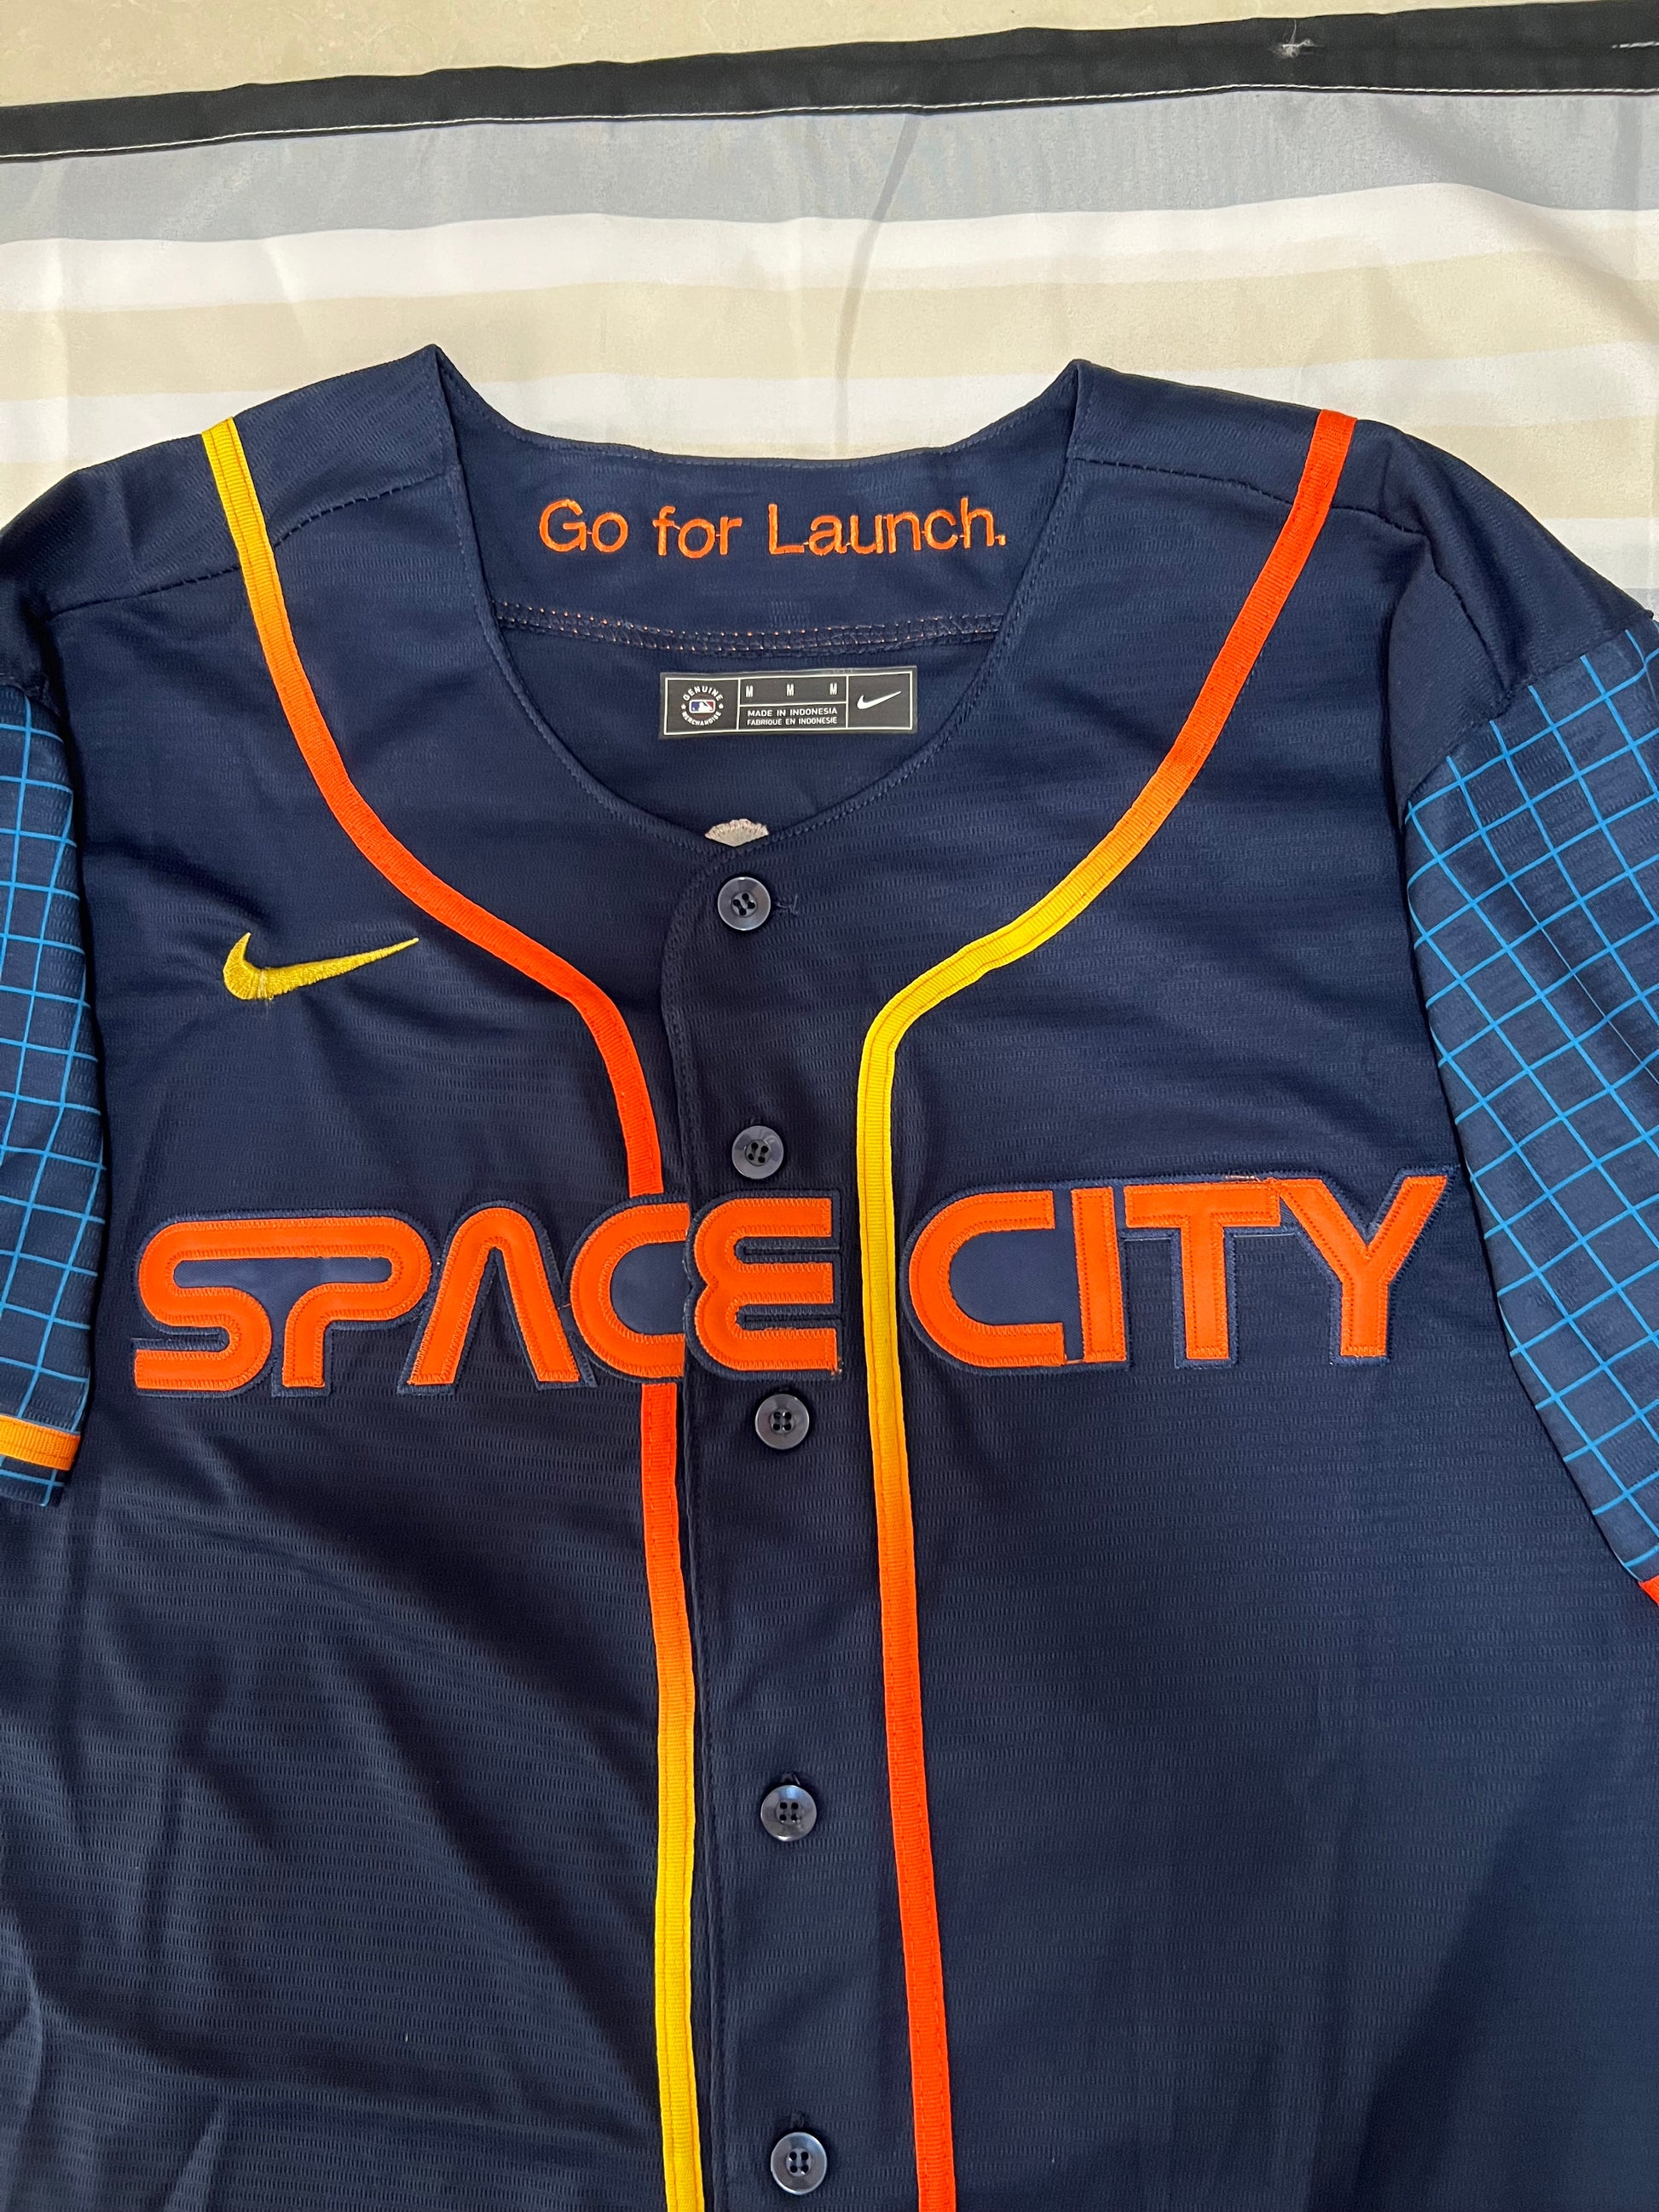 alvarez space city jersey